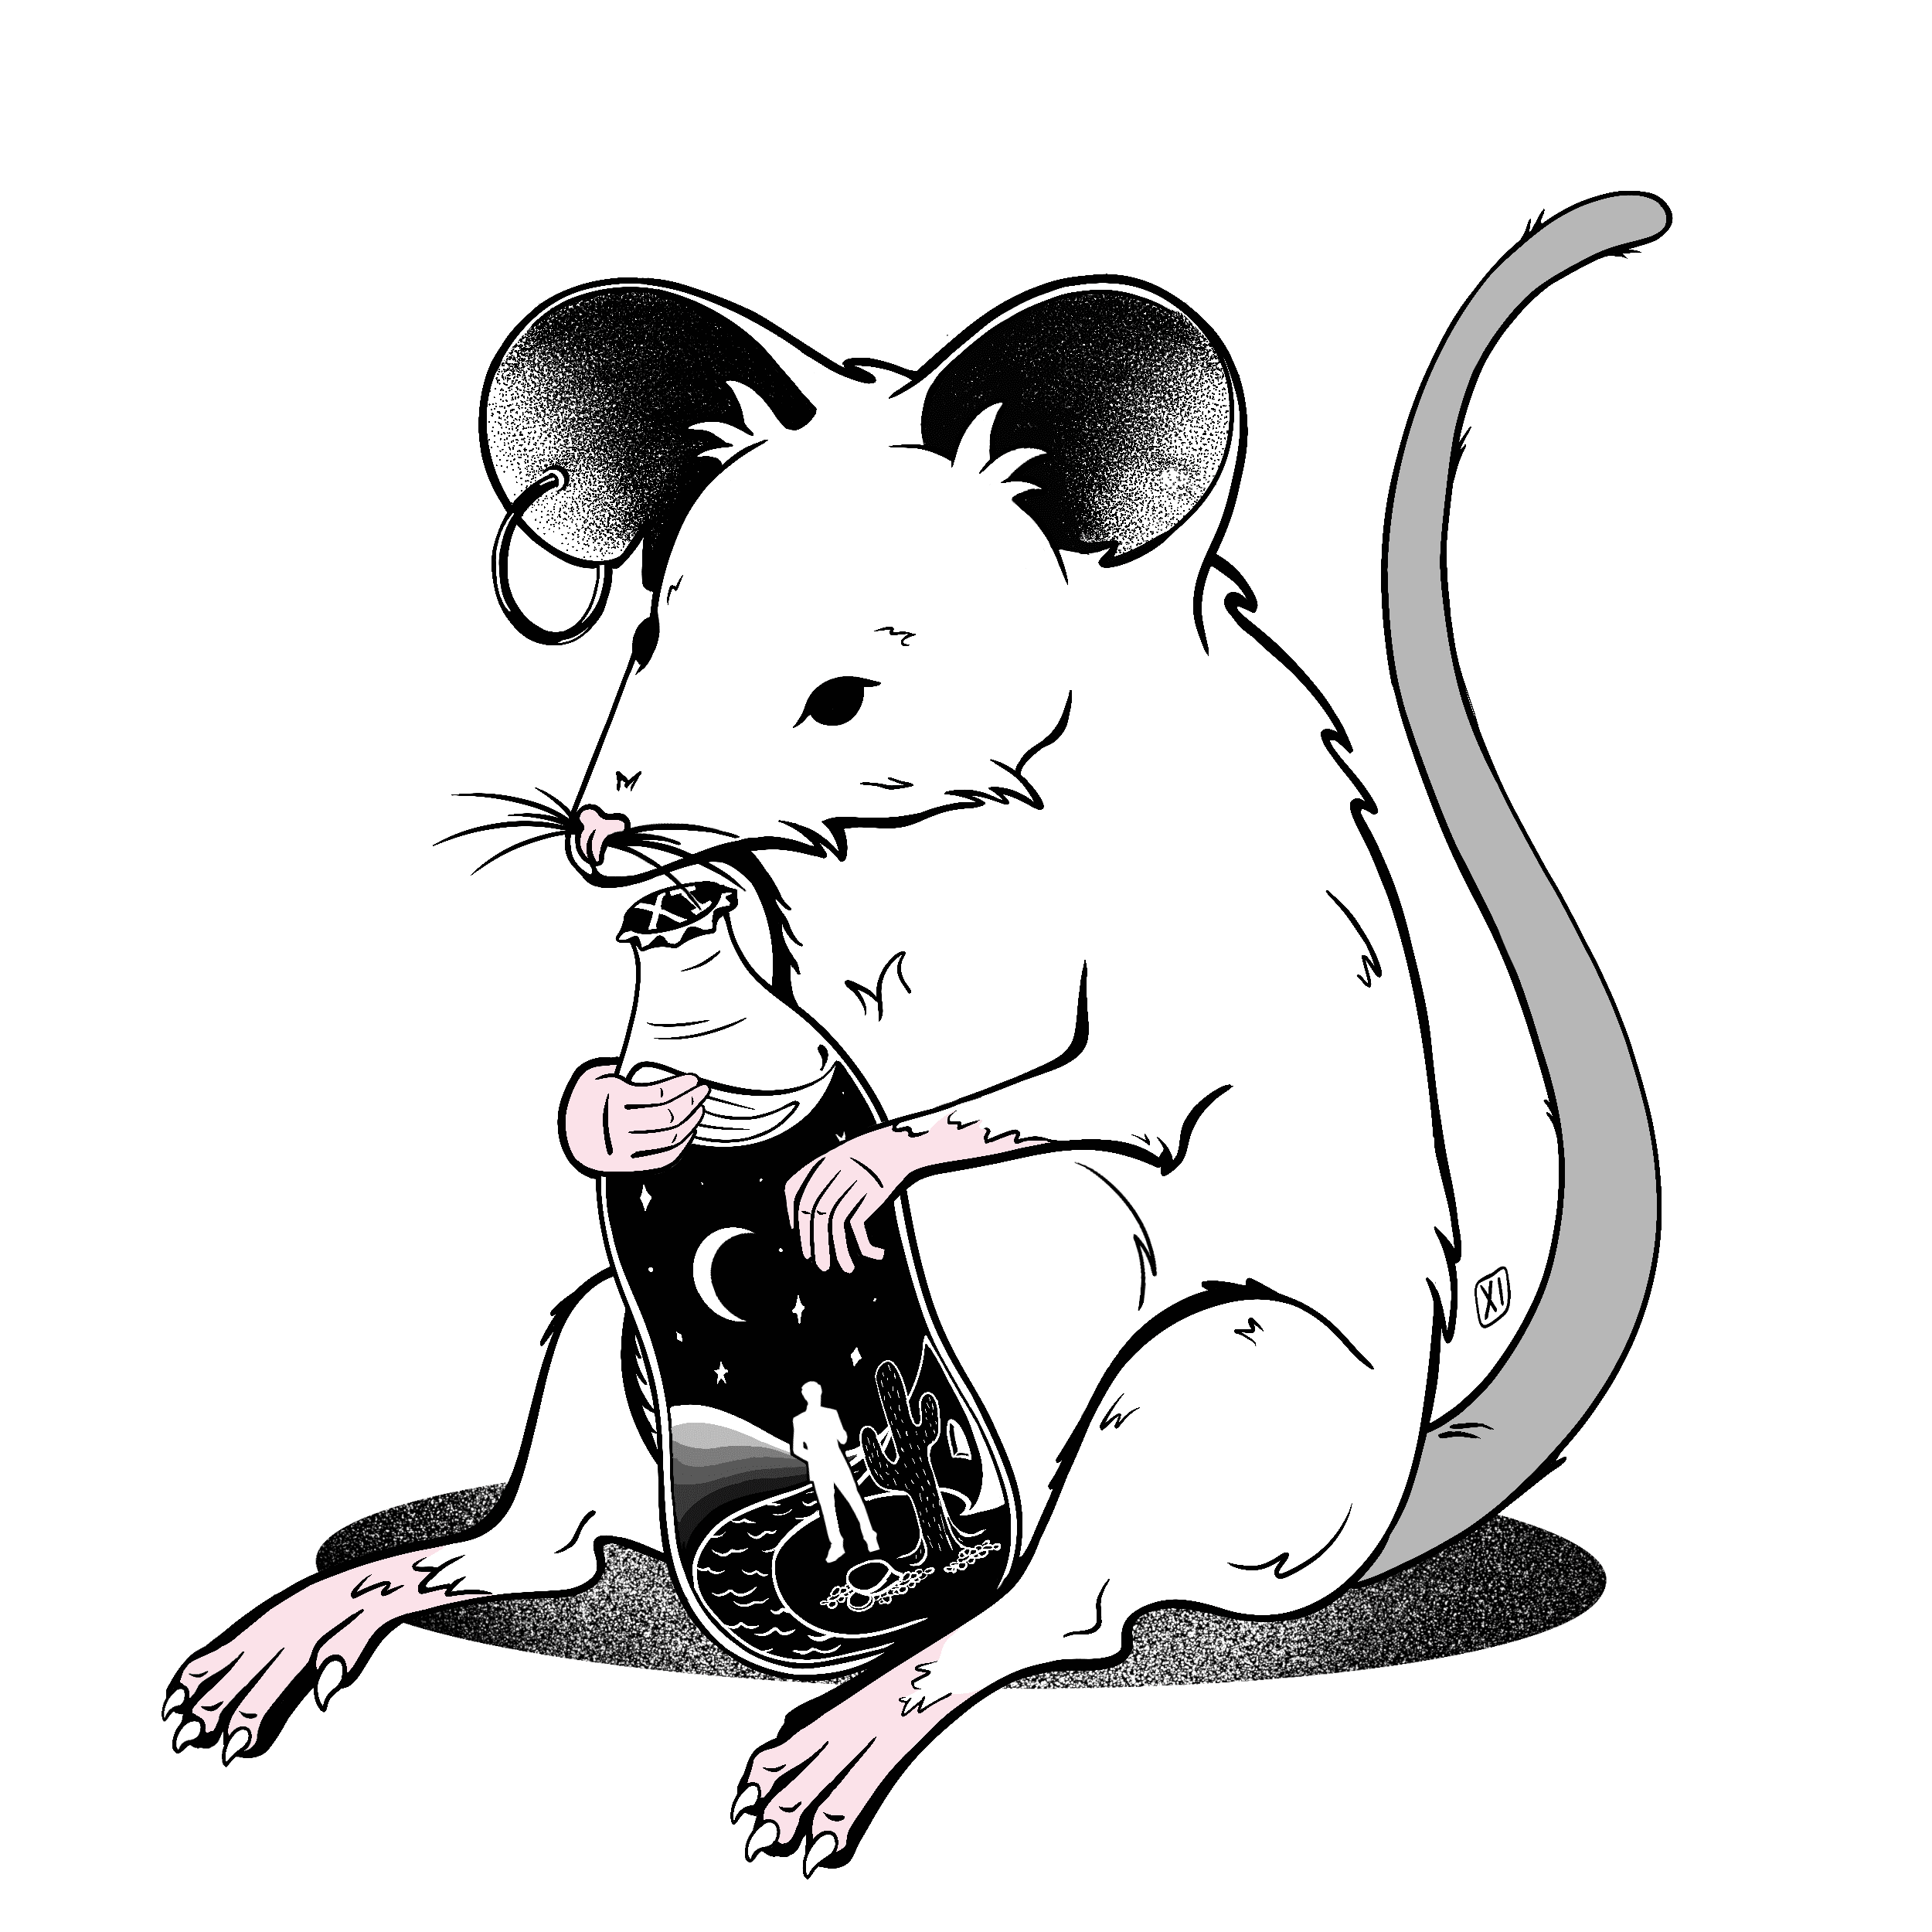 Prof. Rat Benetar